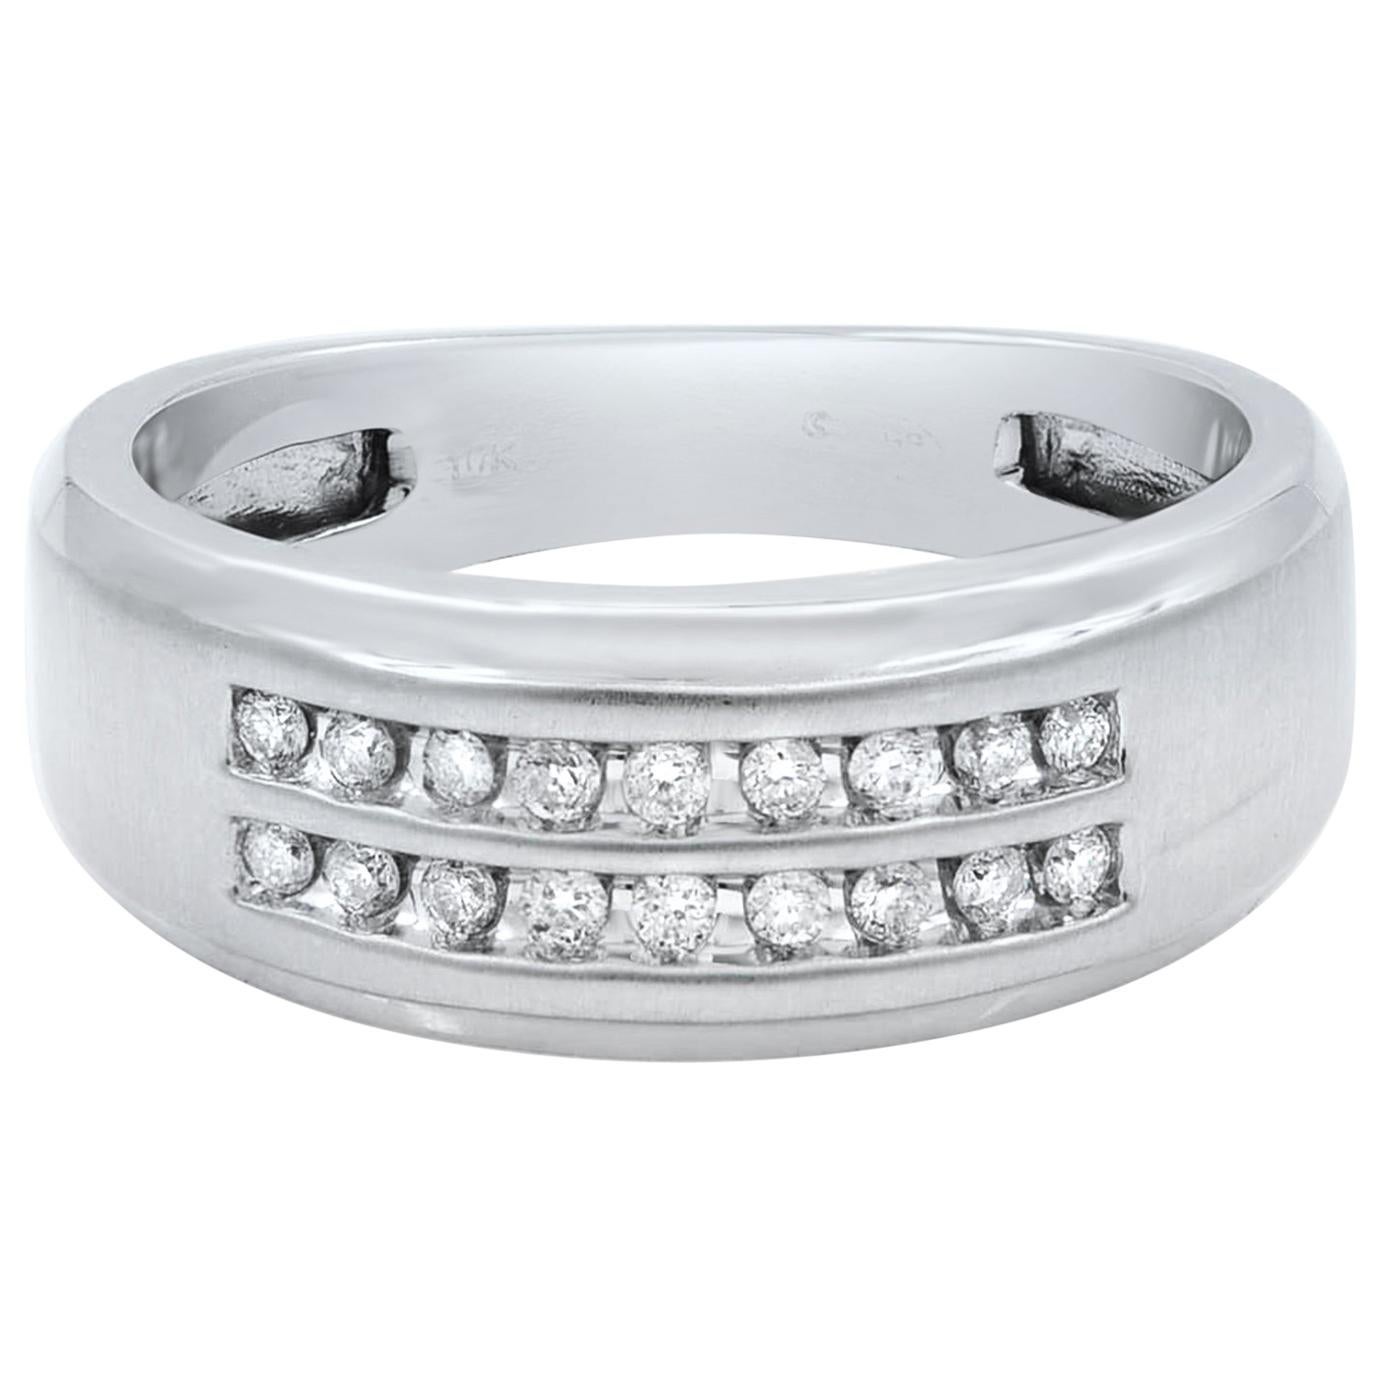 Round Cut Diamond Men's Wedding Band Ring 10k White Gold 0.36 Cttw For Sale